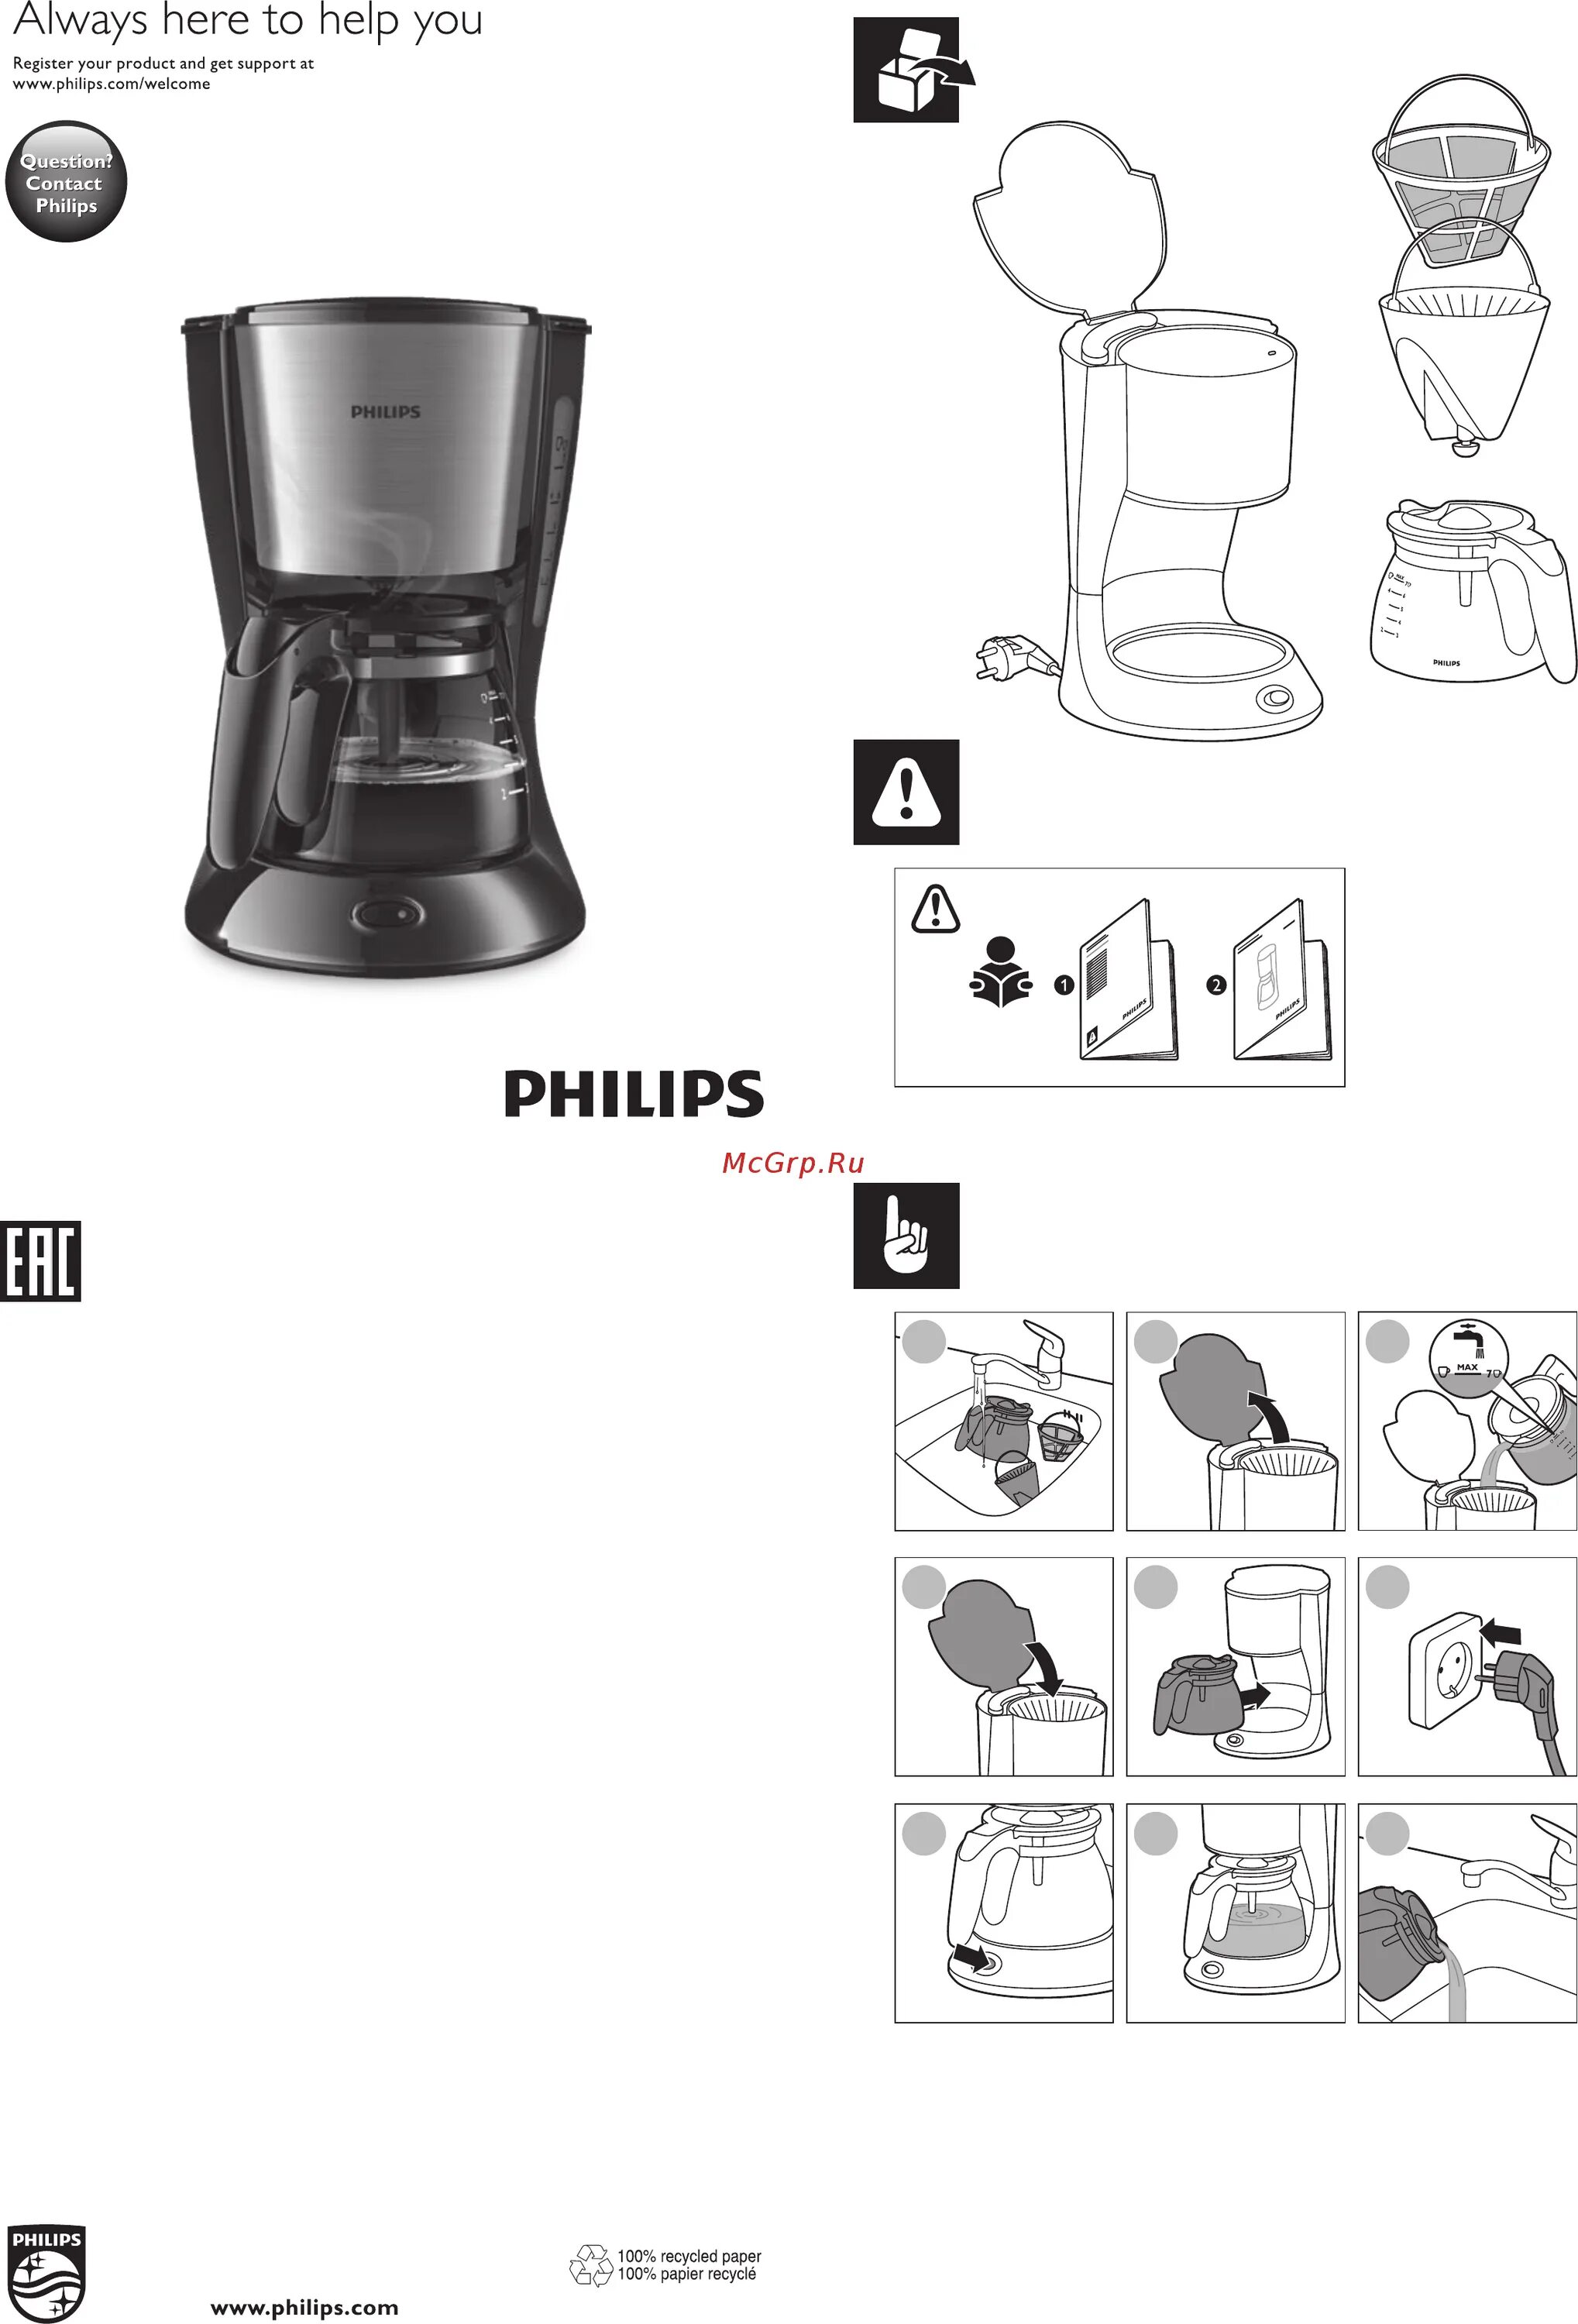 Кофеварка филипс инструкция. Кофеварка Philips hd7434. Philips Daily collection hd7434/20. Кофеварка Филипс капельная hd7434 инструкция.